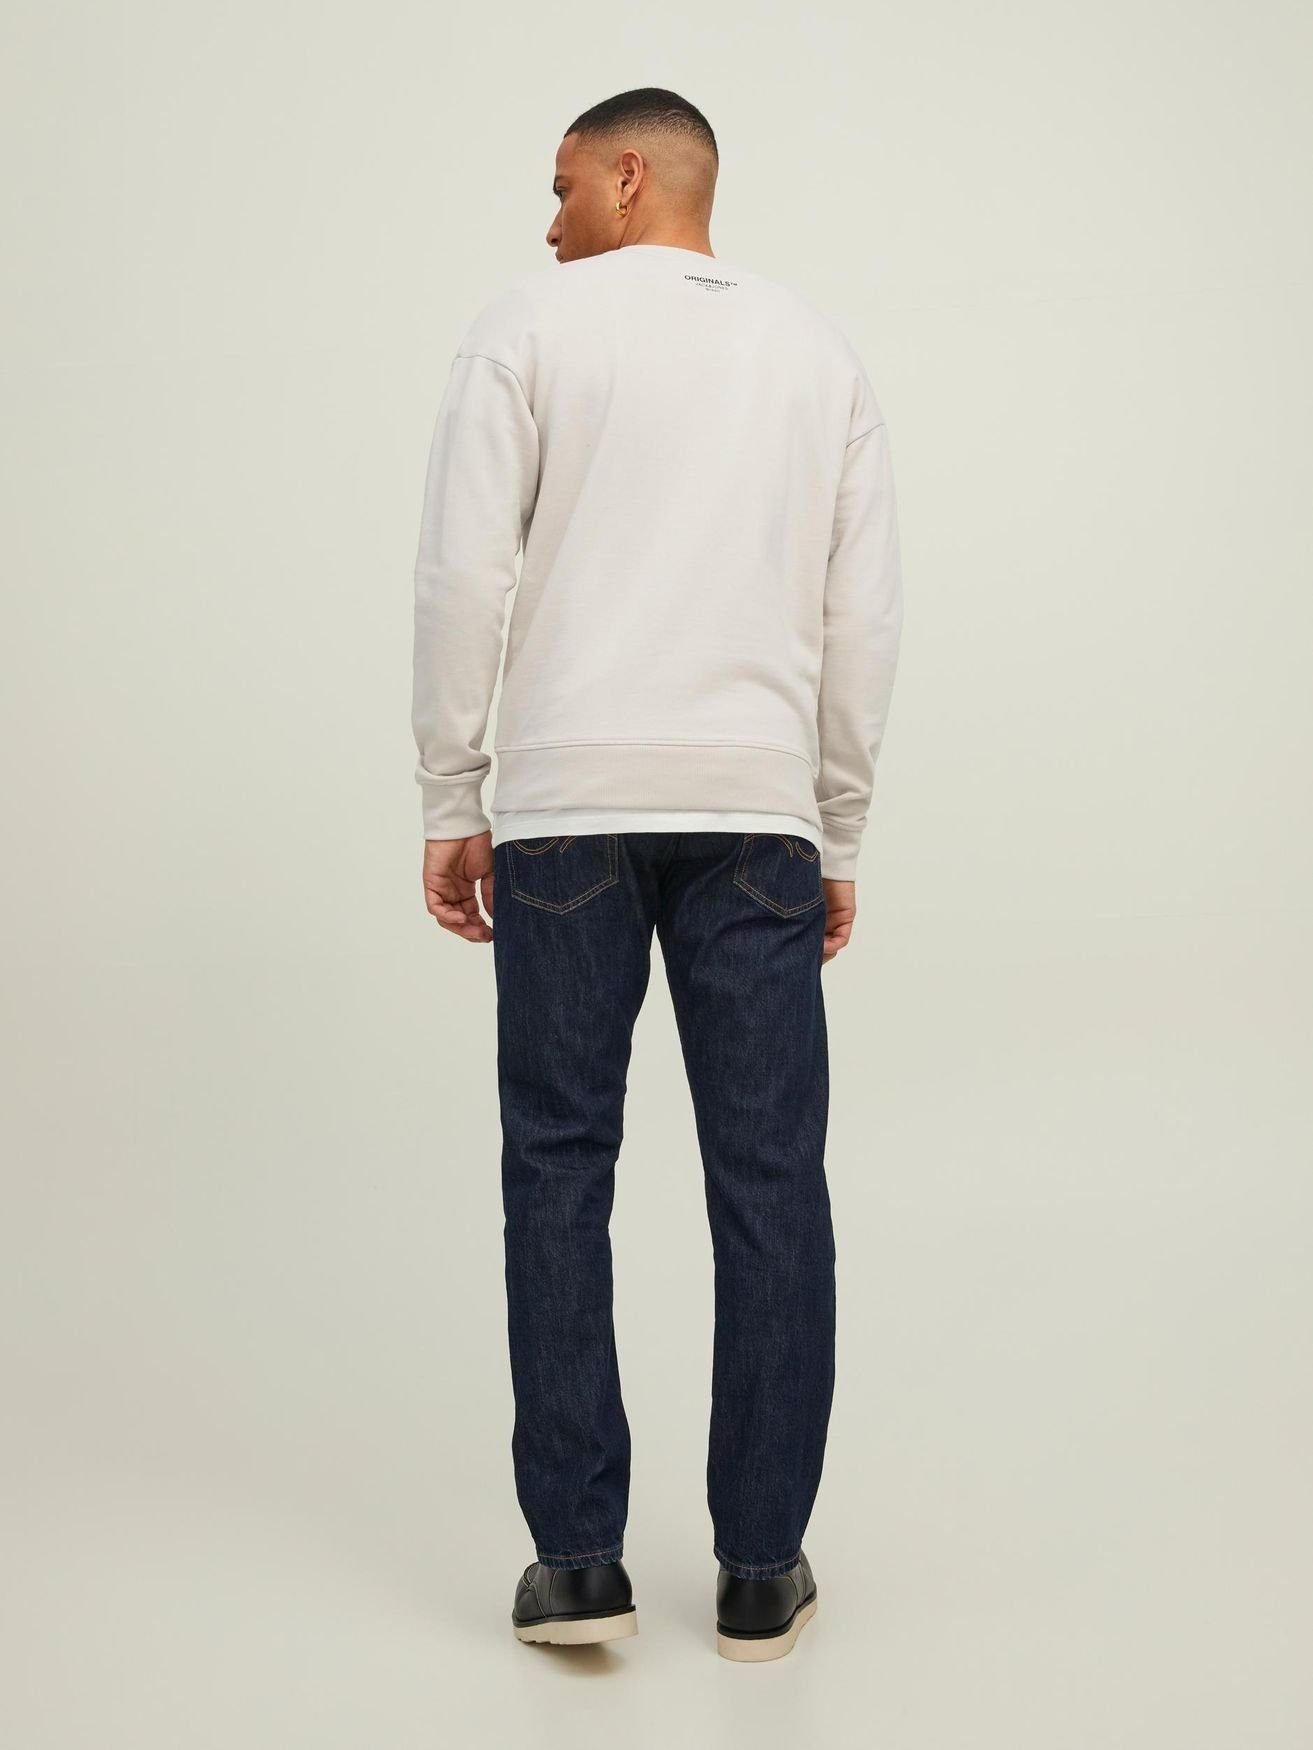 Sand Jack Rundhals Sweater & Shirt Pullover Sweatshirt Langarm Basic 4672 in Jones JORCLEAN